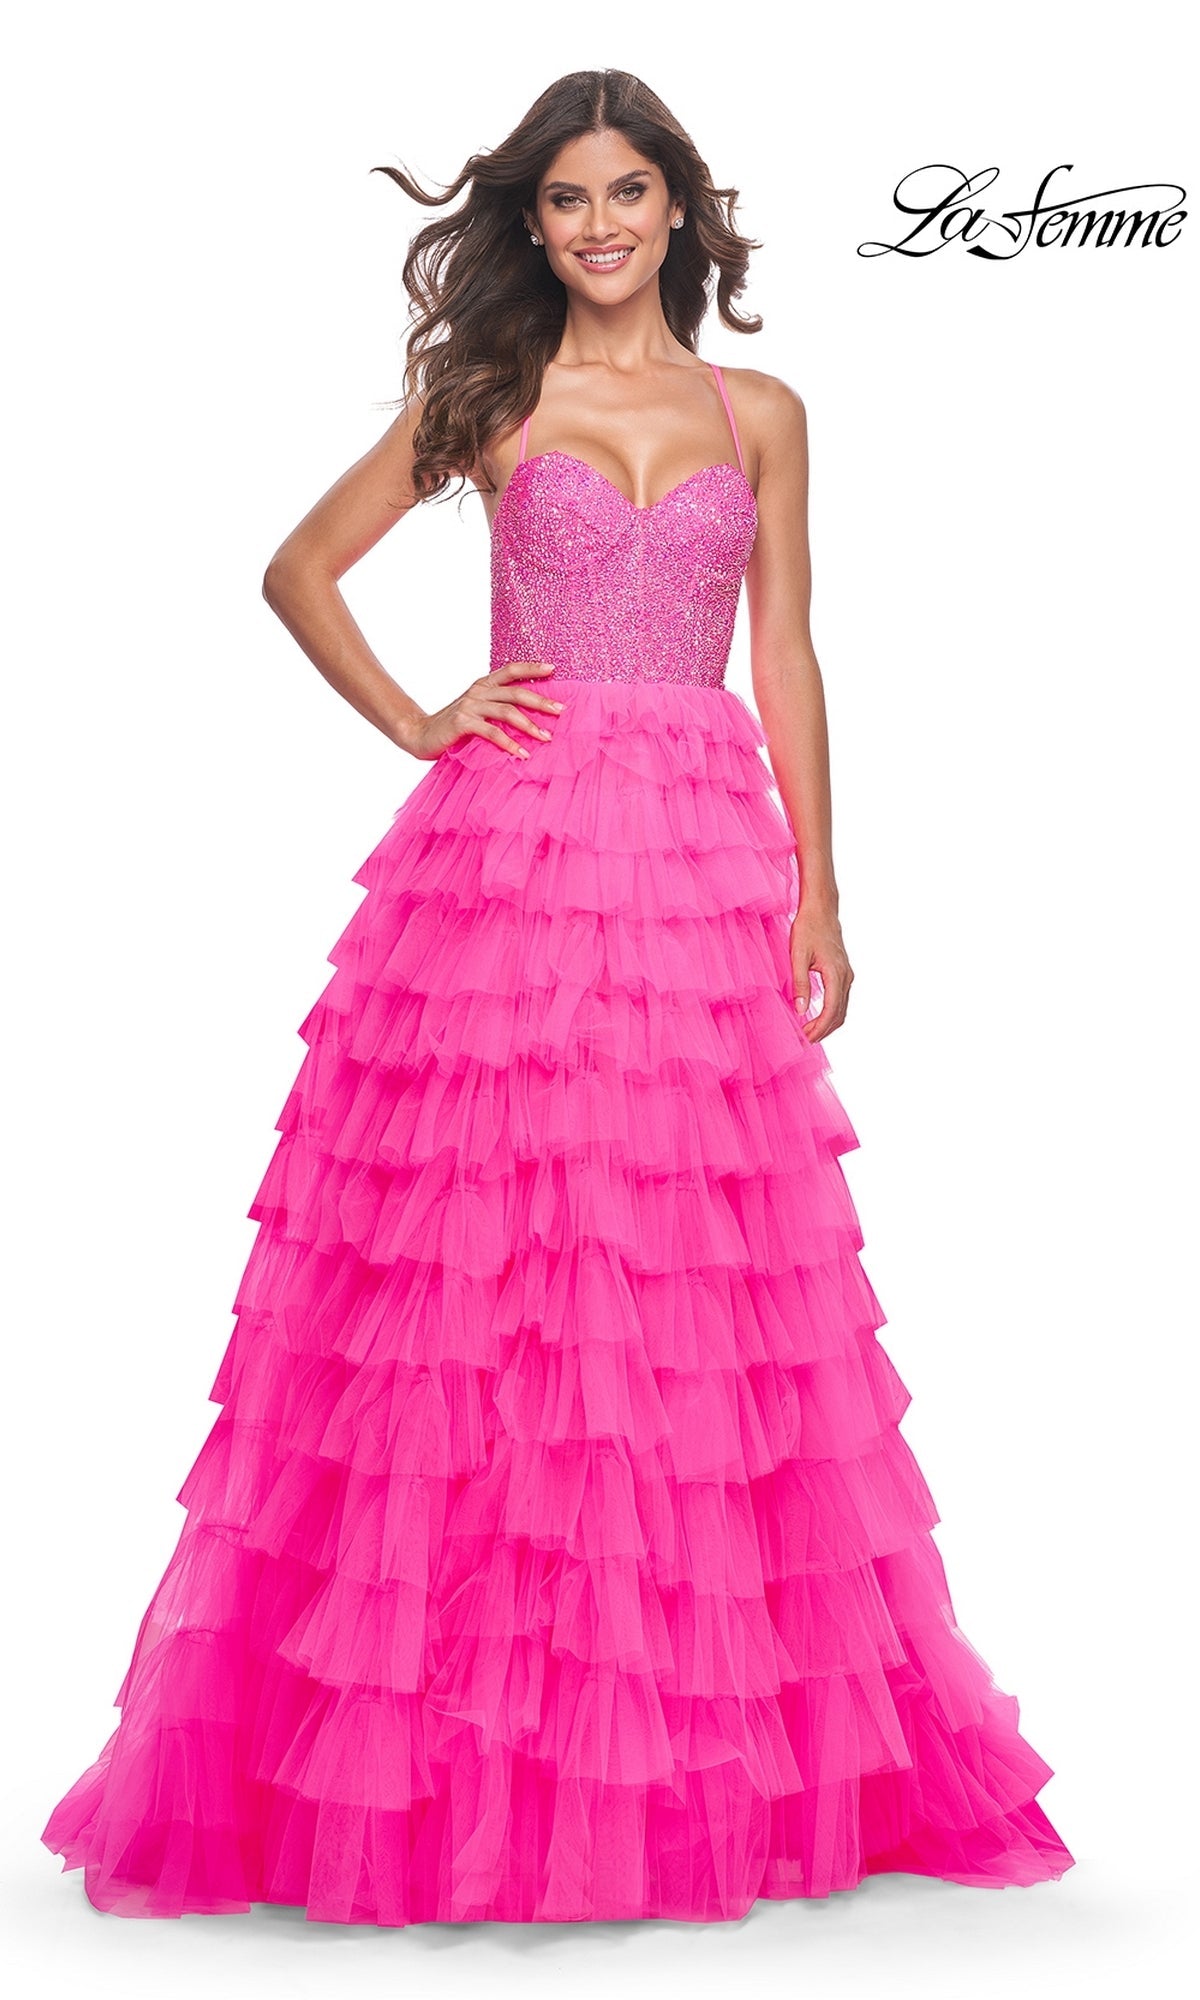  La Femme 32335 Formal Prom Dress